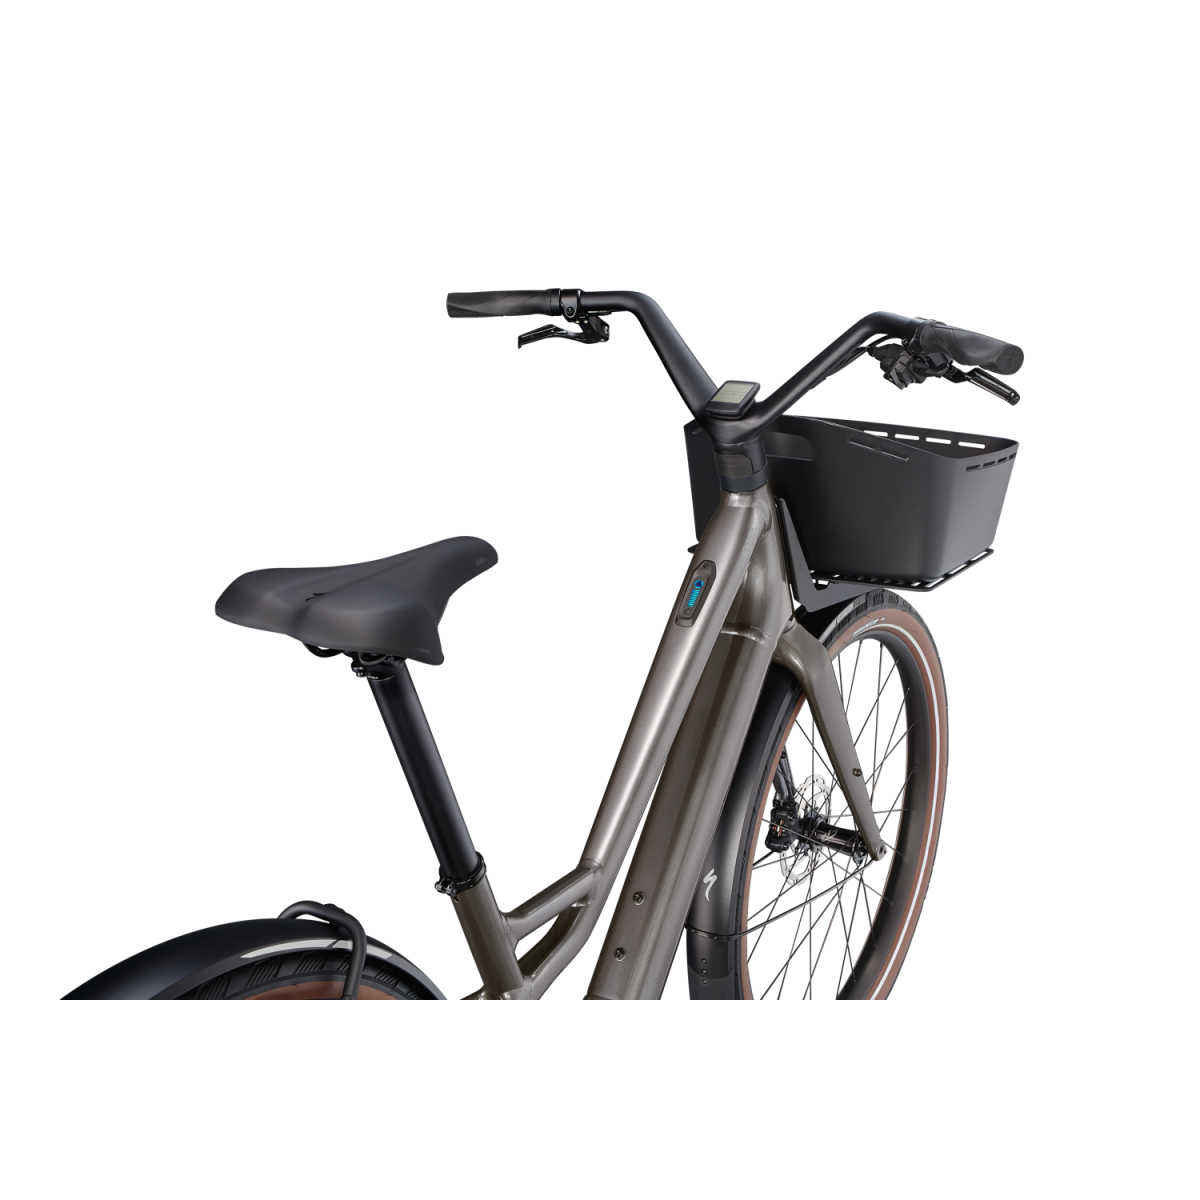 Specialized Turbo Como SL 5.0  elektrinis dviratis / Smoke - Transparent